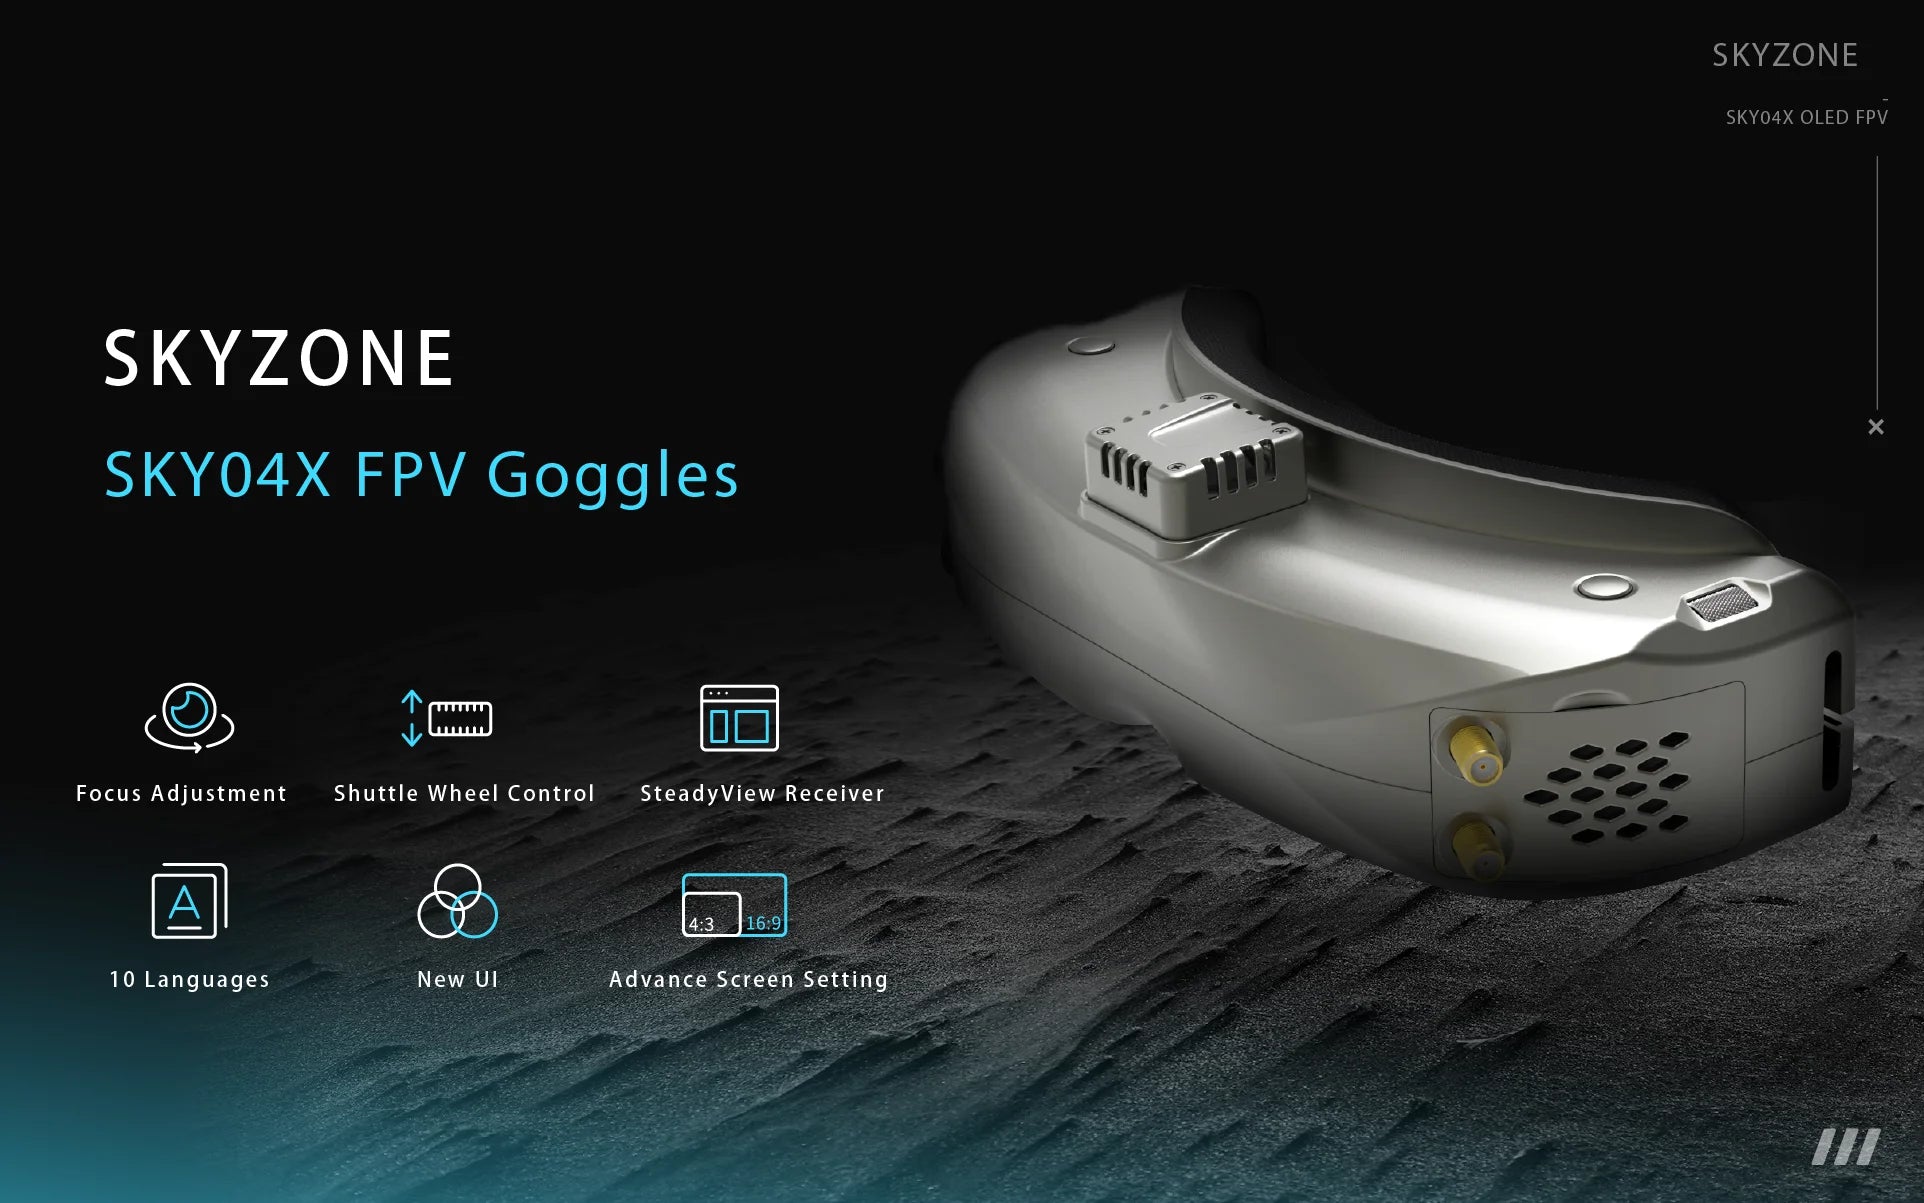 SKYZONE SKY04X V2  FPV Goggle, Focus Adjustment Shuttle Wheel Control SteadyView Receiver 4.3 16.9 10 Language